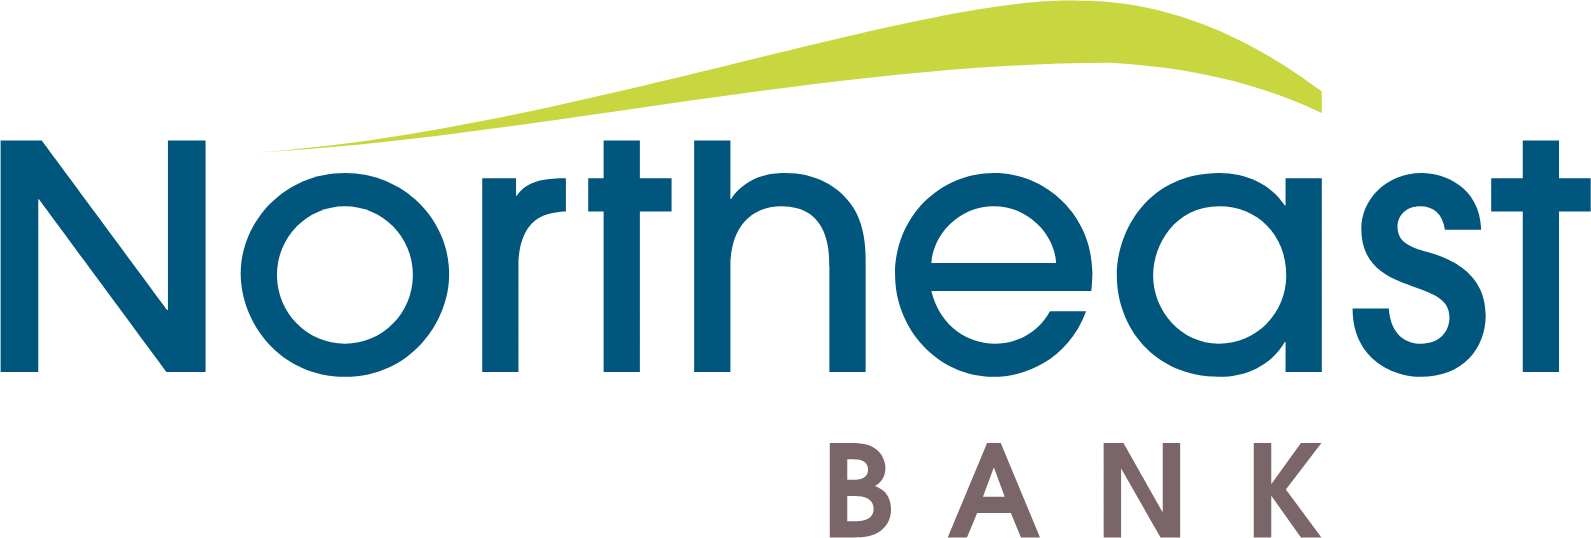 Northeast Bank logo large (transparent PNG)